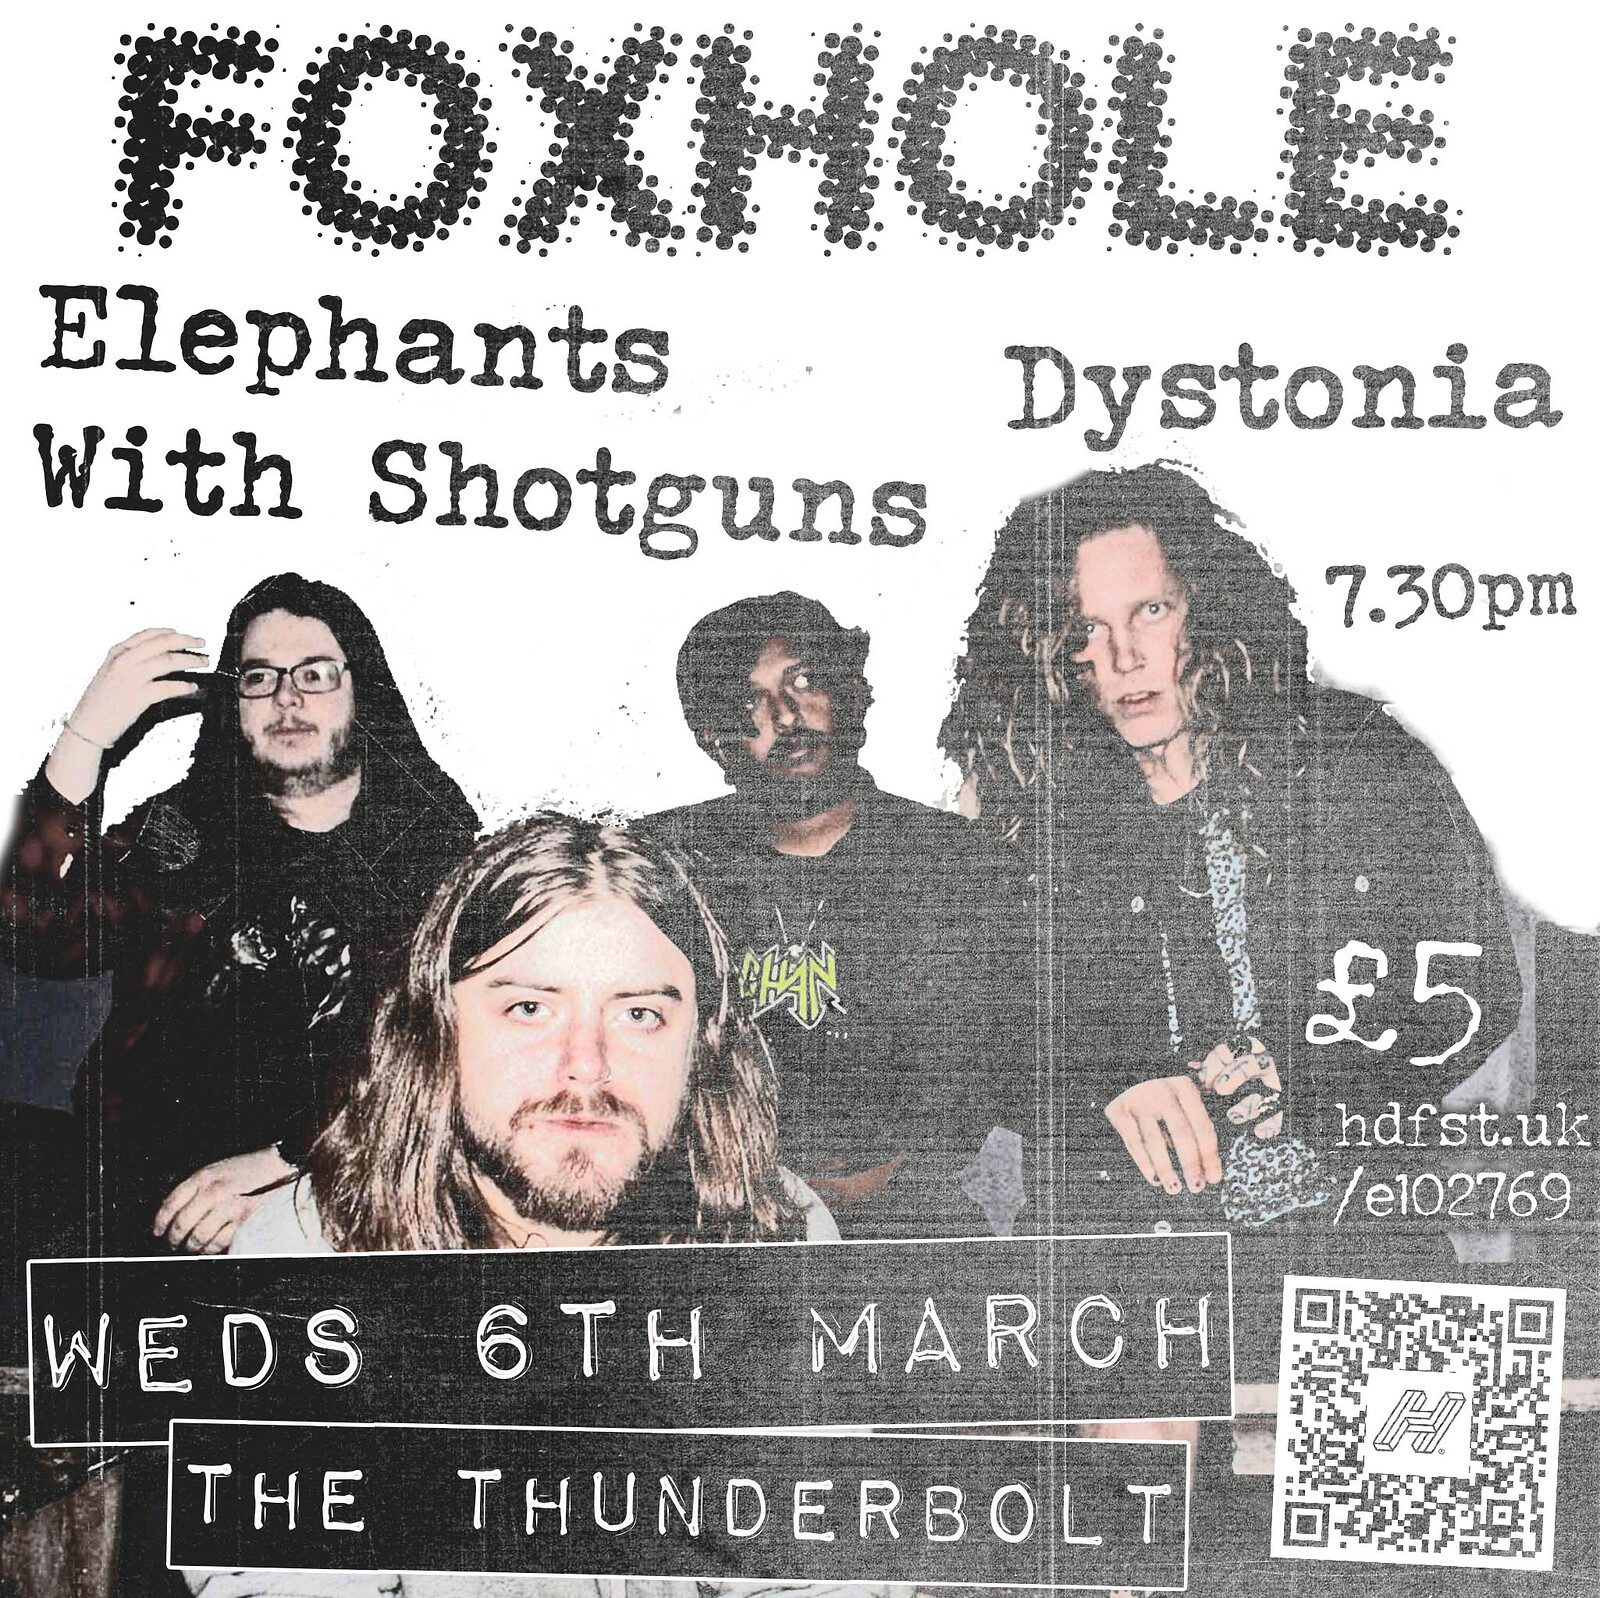 Foxhole + Elephants With Shotguns + Dystonia at The Thunderbolt